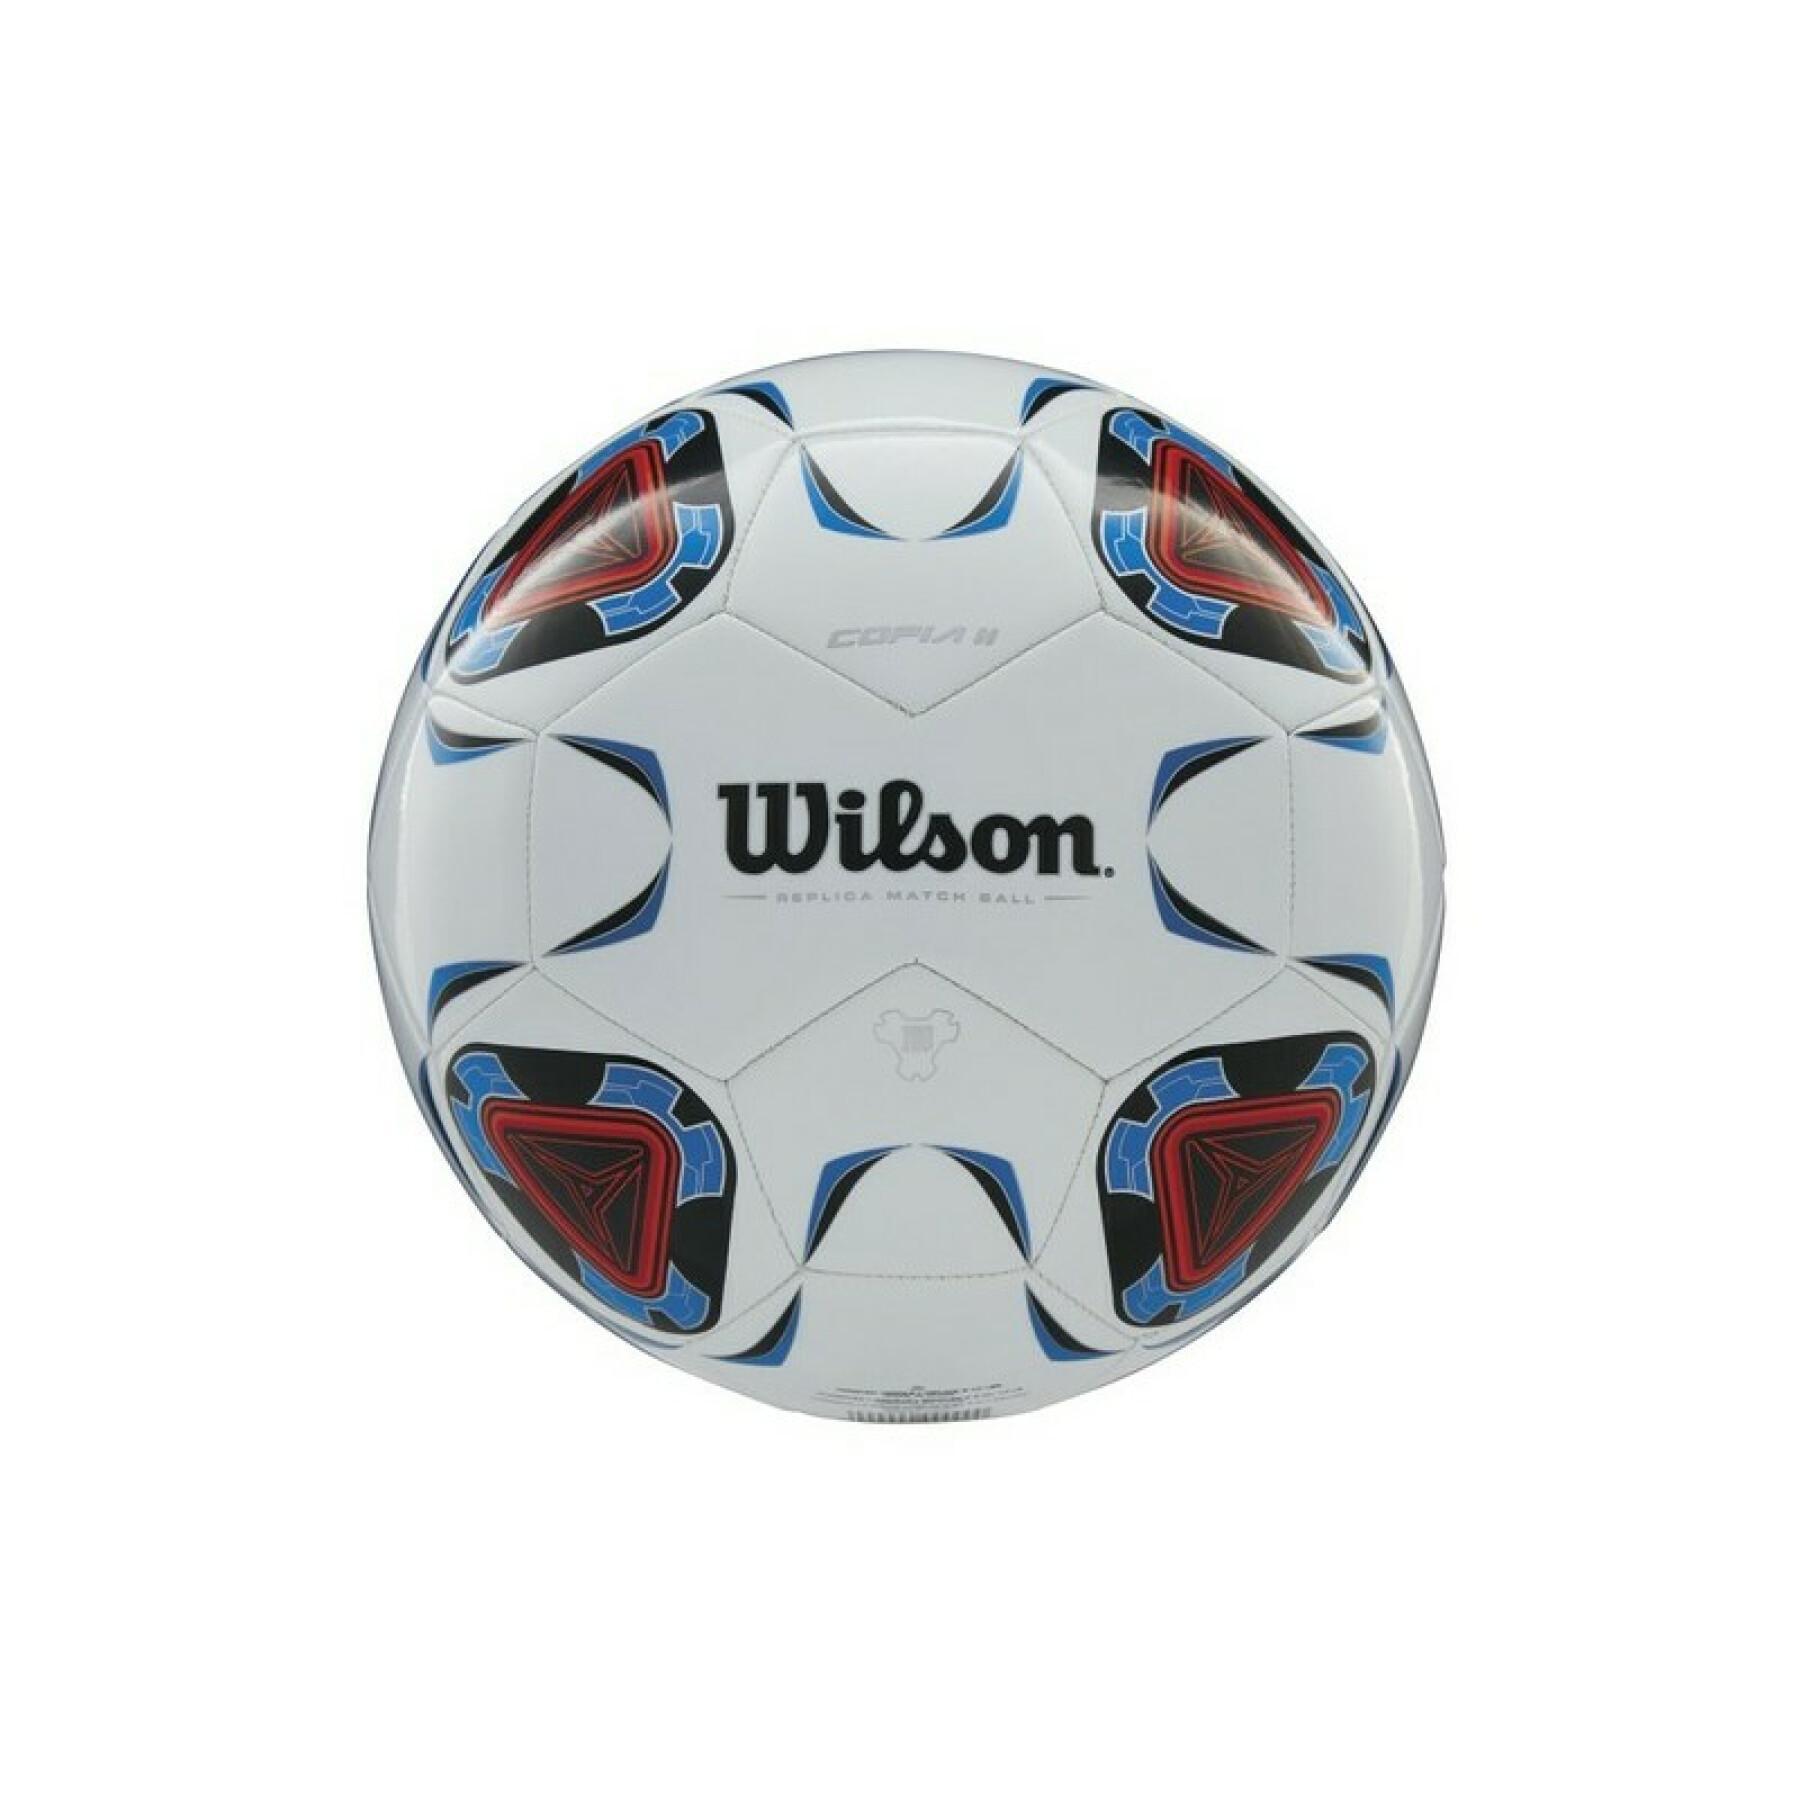 Ballon Wilson Copia II